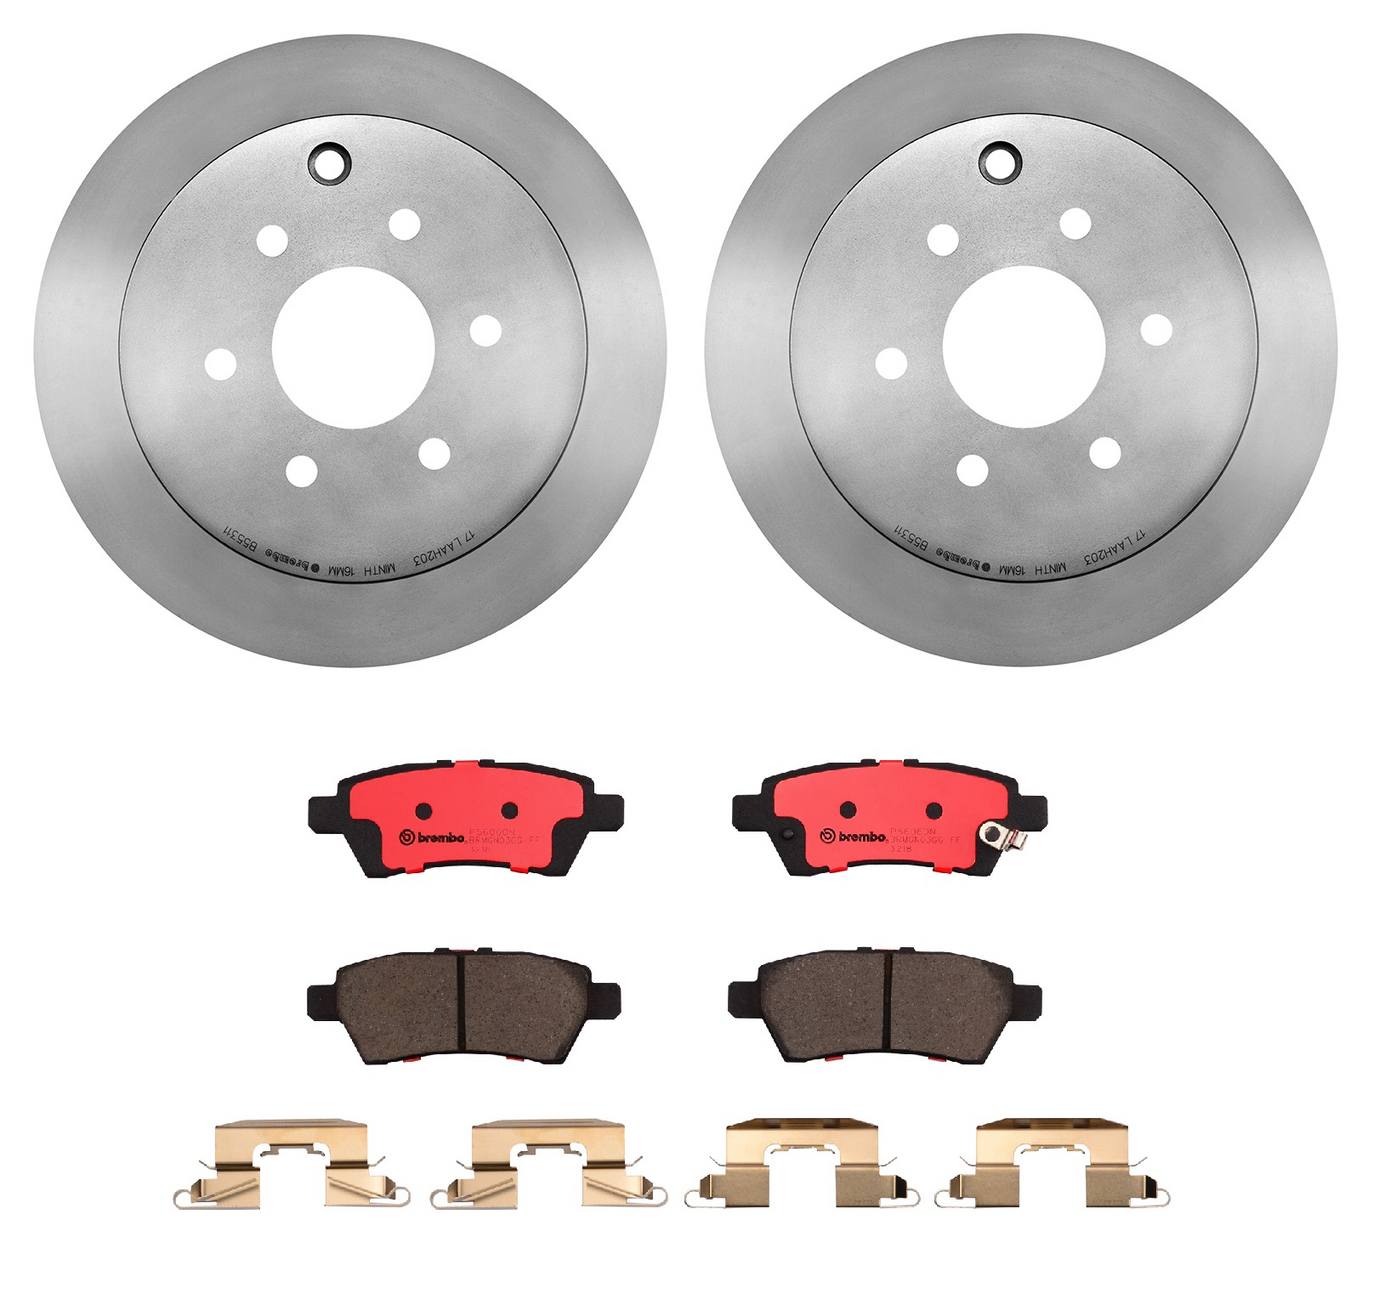 Nissan Disc Brake Pad and Rotor Kit - Rear (286mm) (Ceramic) Brembo